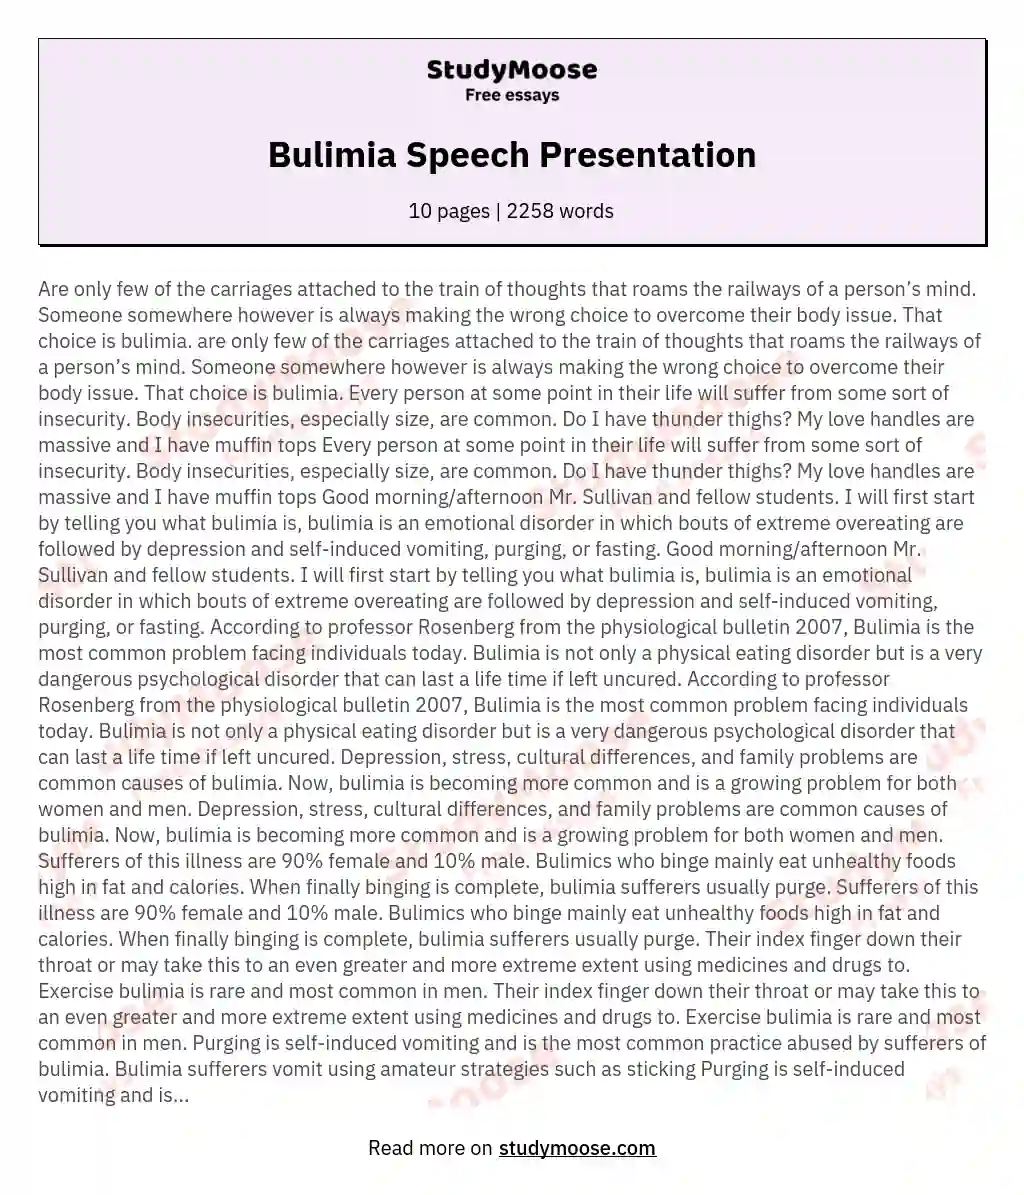 Bulimia Speech Presentation essay